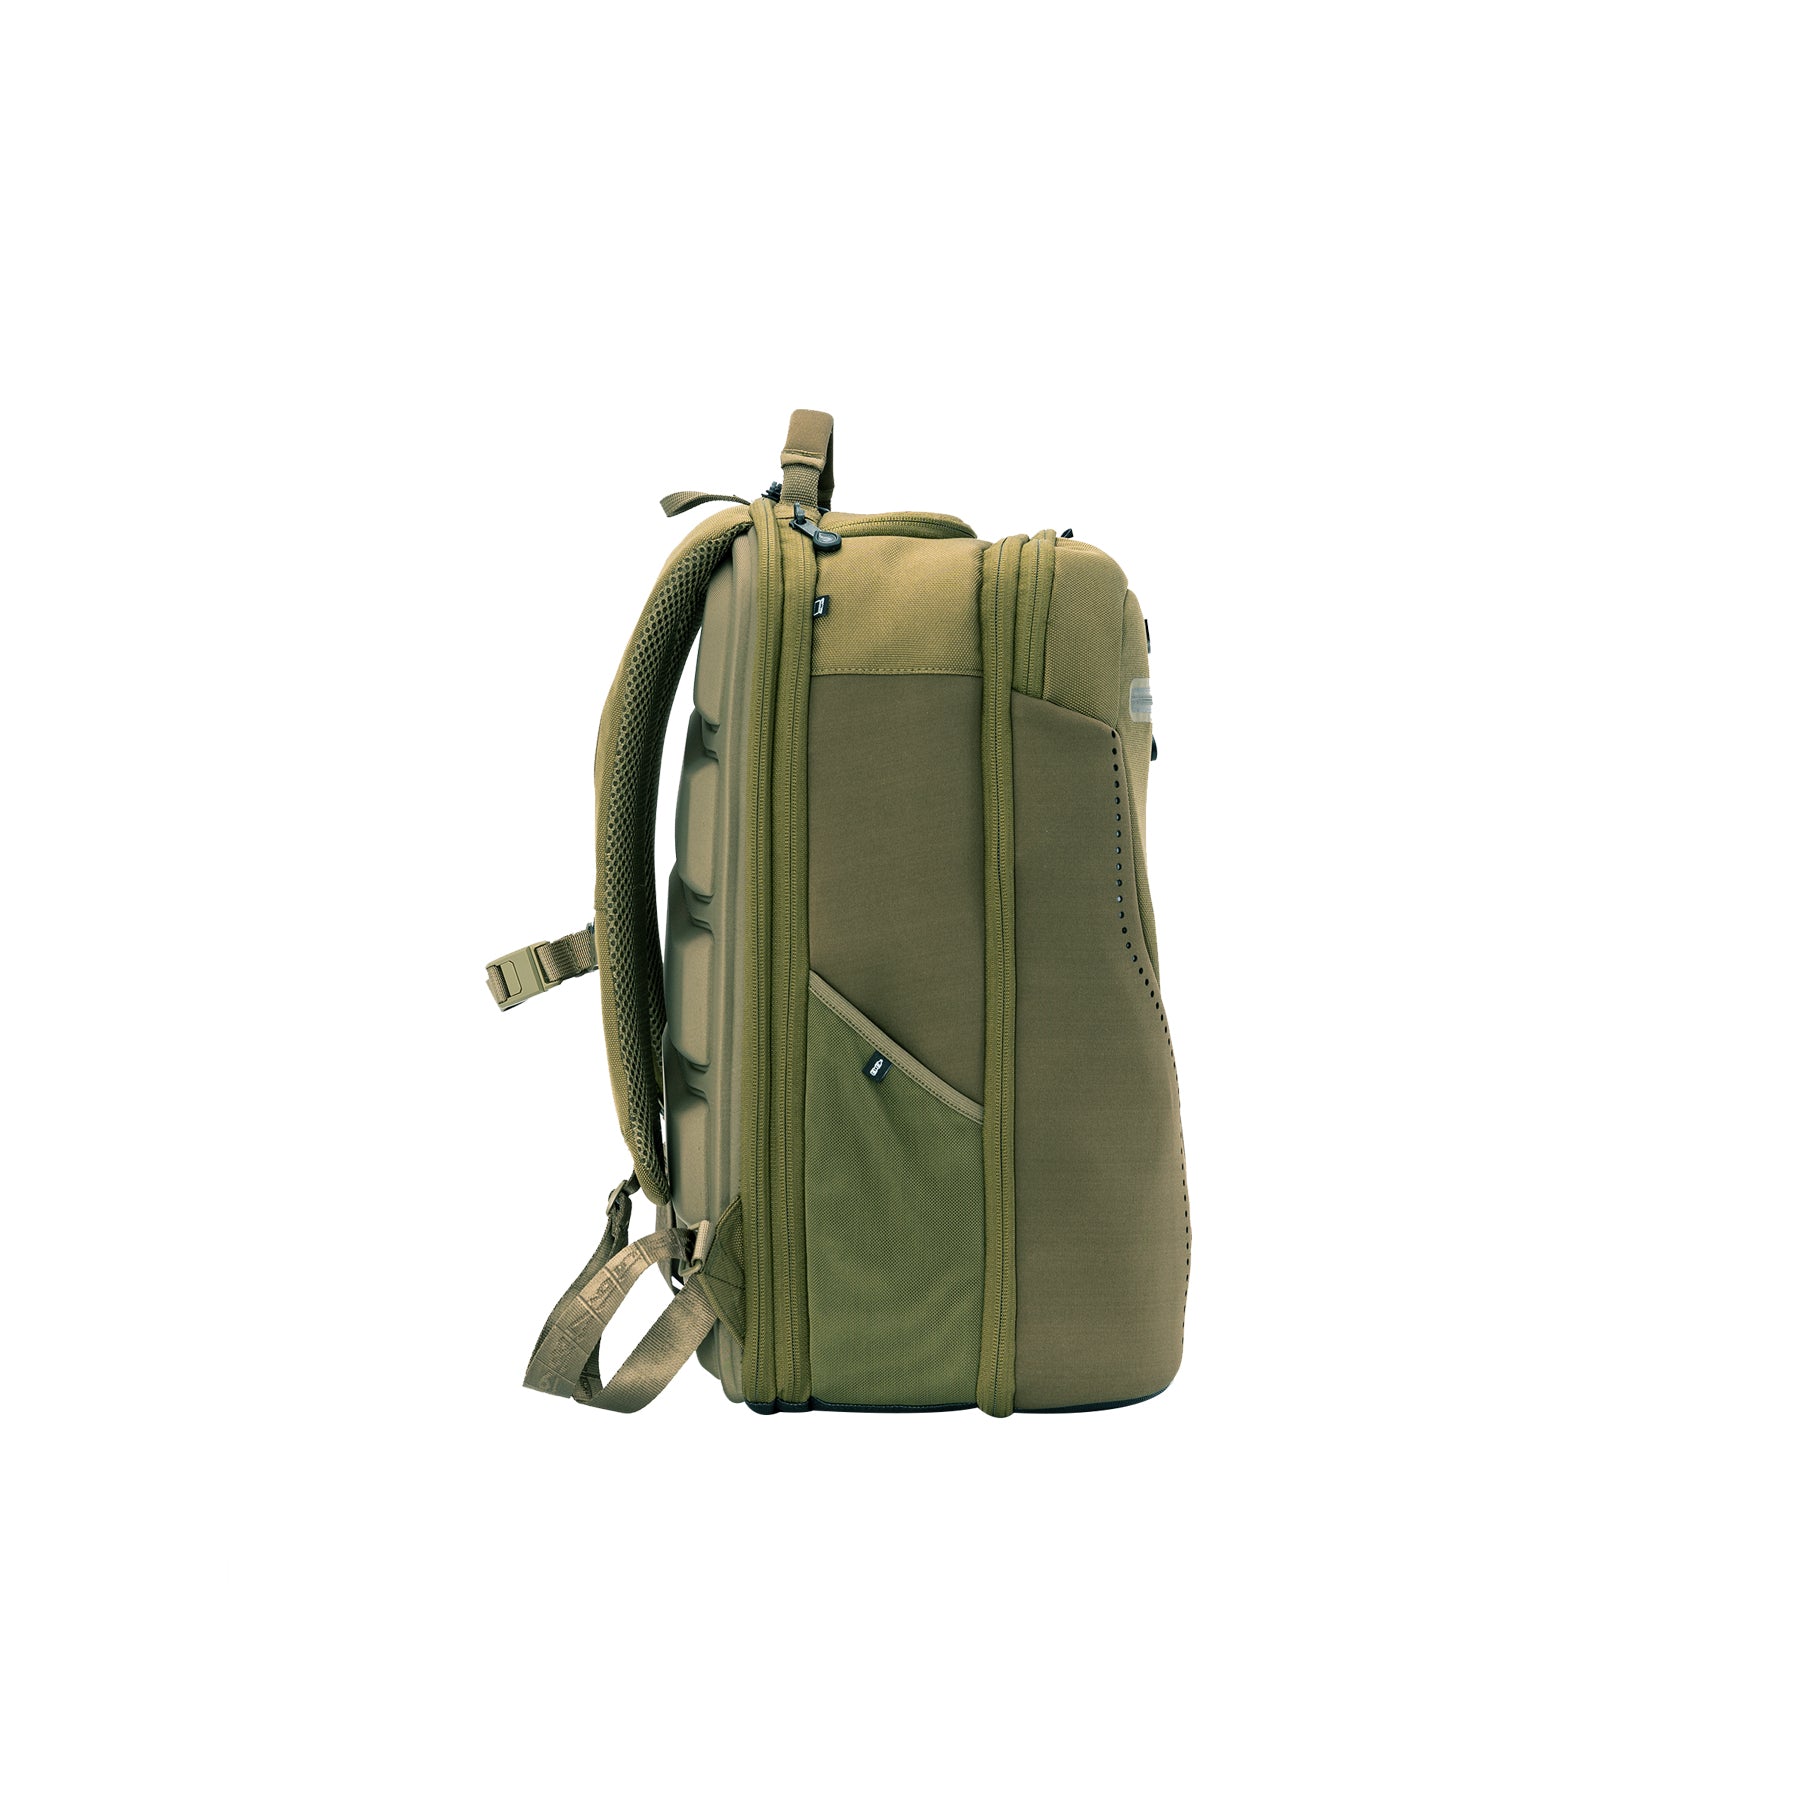 TRAVELER MINI Olive - The Biarritz Deluxe Travel Backpack